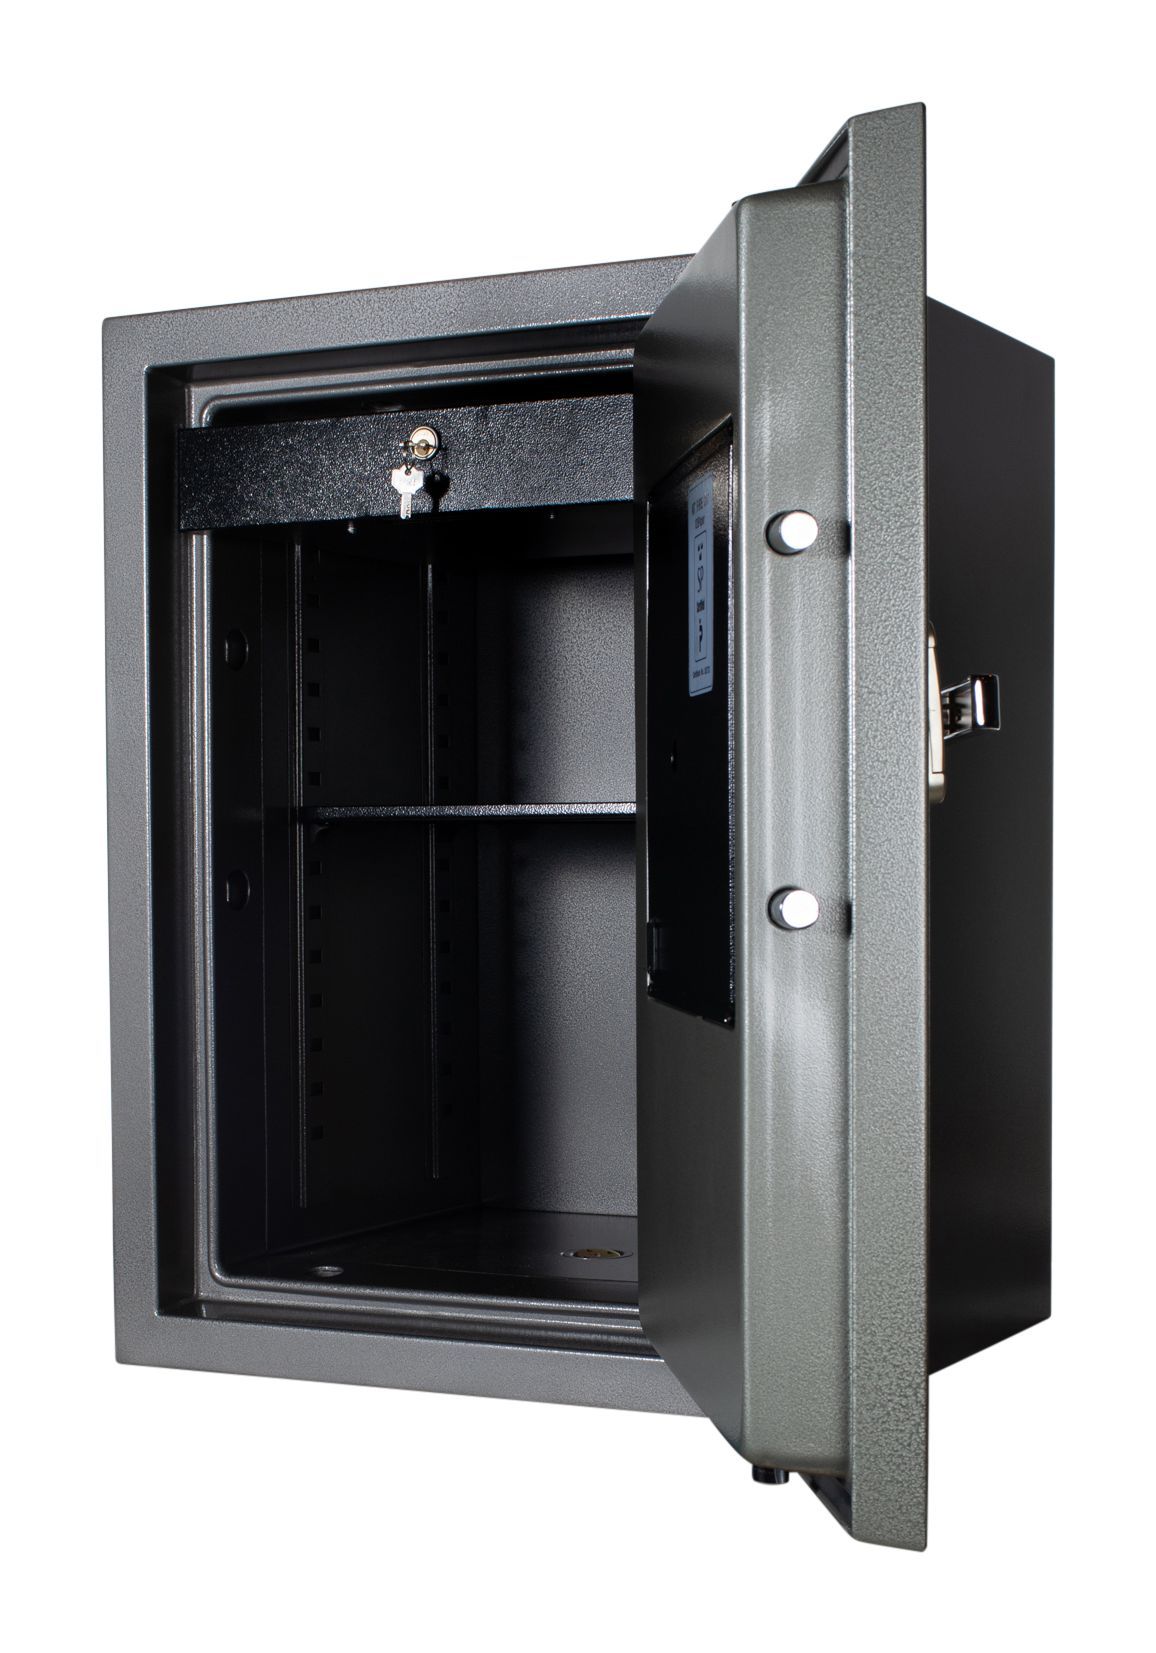 Gardall RC1237CC Rotary Double Door Deposit Safe - Alpine Safes